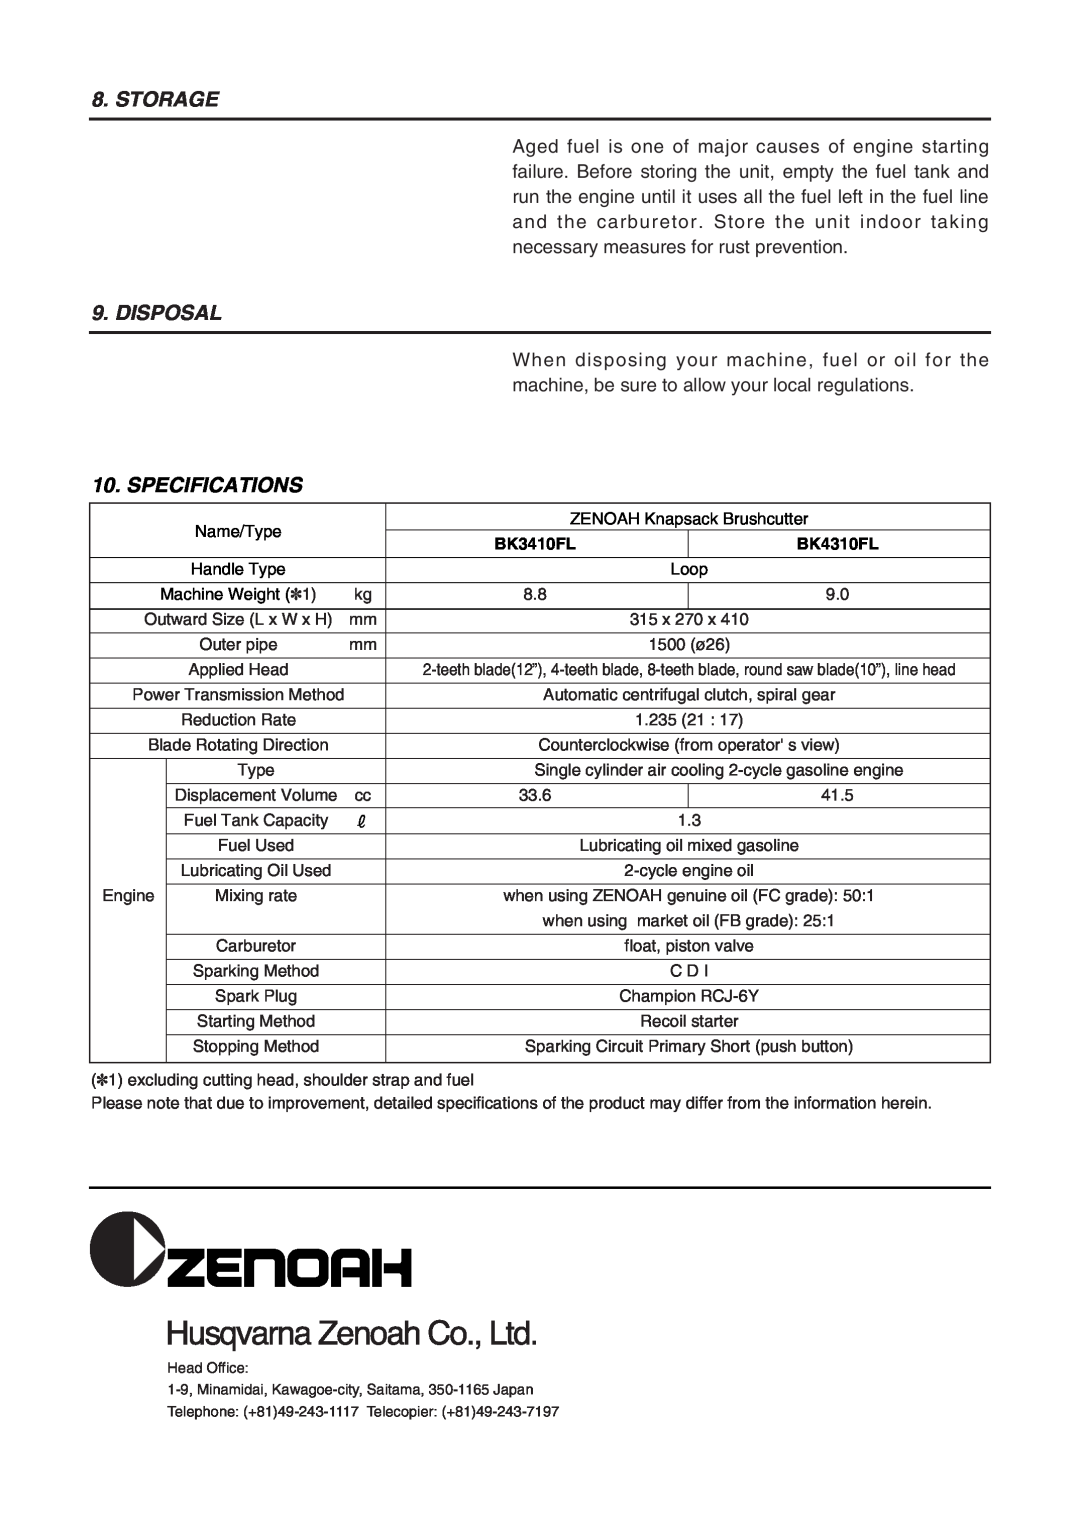 Zenoah BK3410FL owner manual Storage, Disposal, Specifications, BK4310FL 